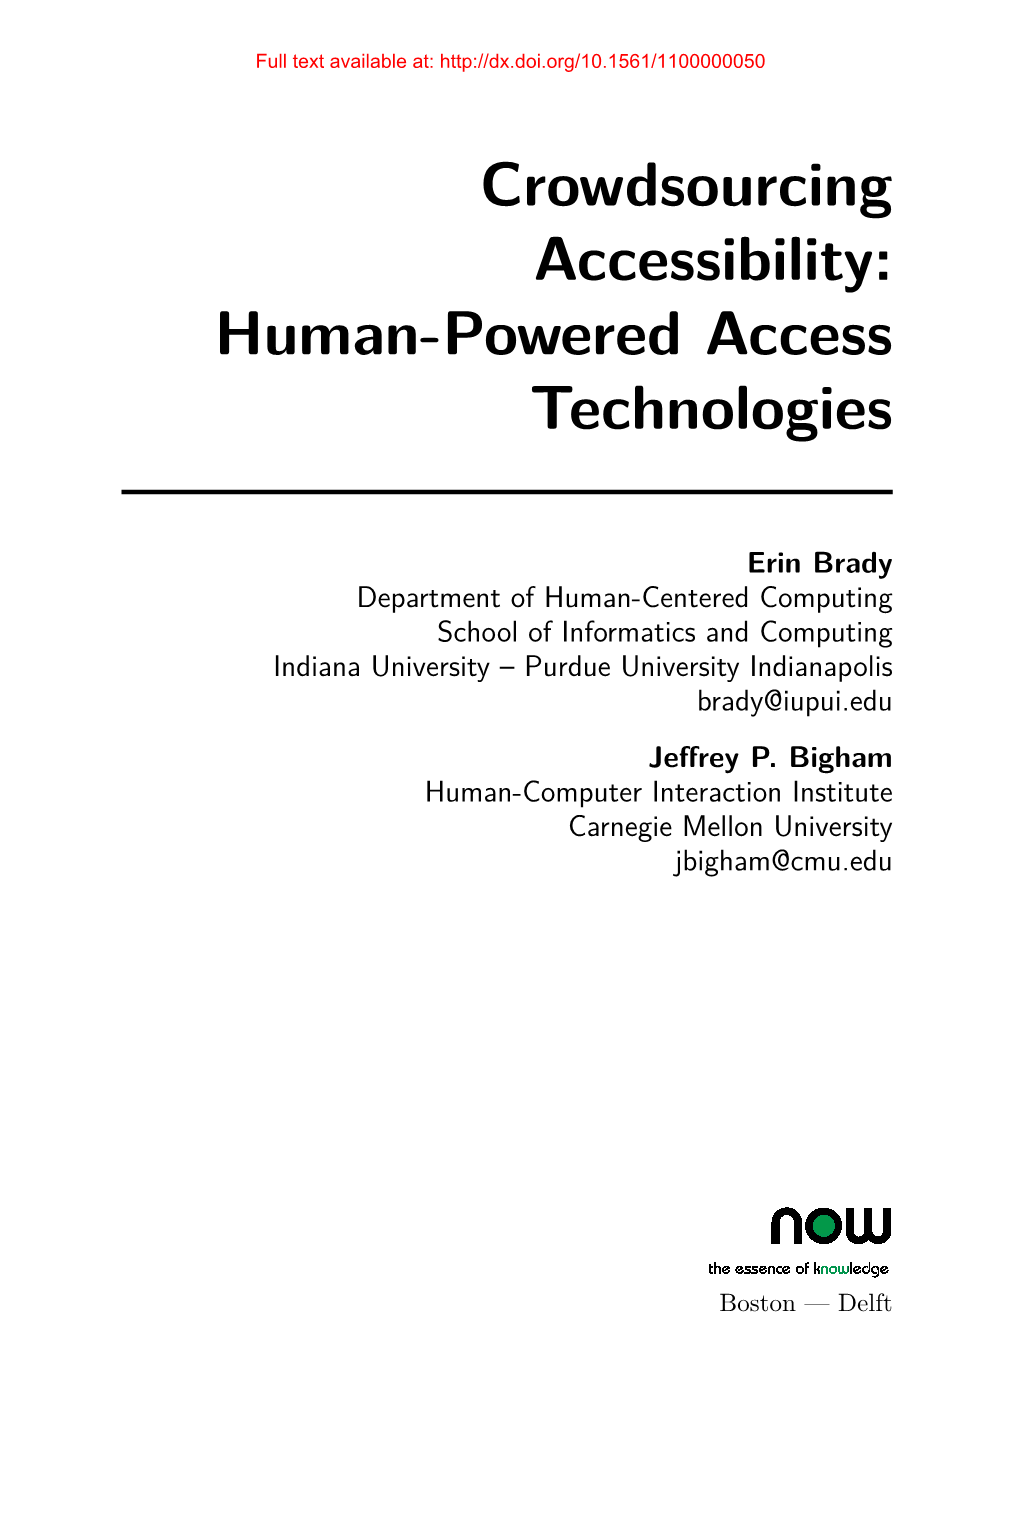 Human-Powered Access Technologies